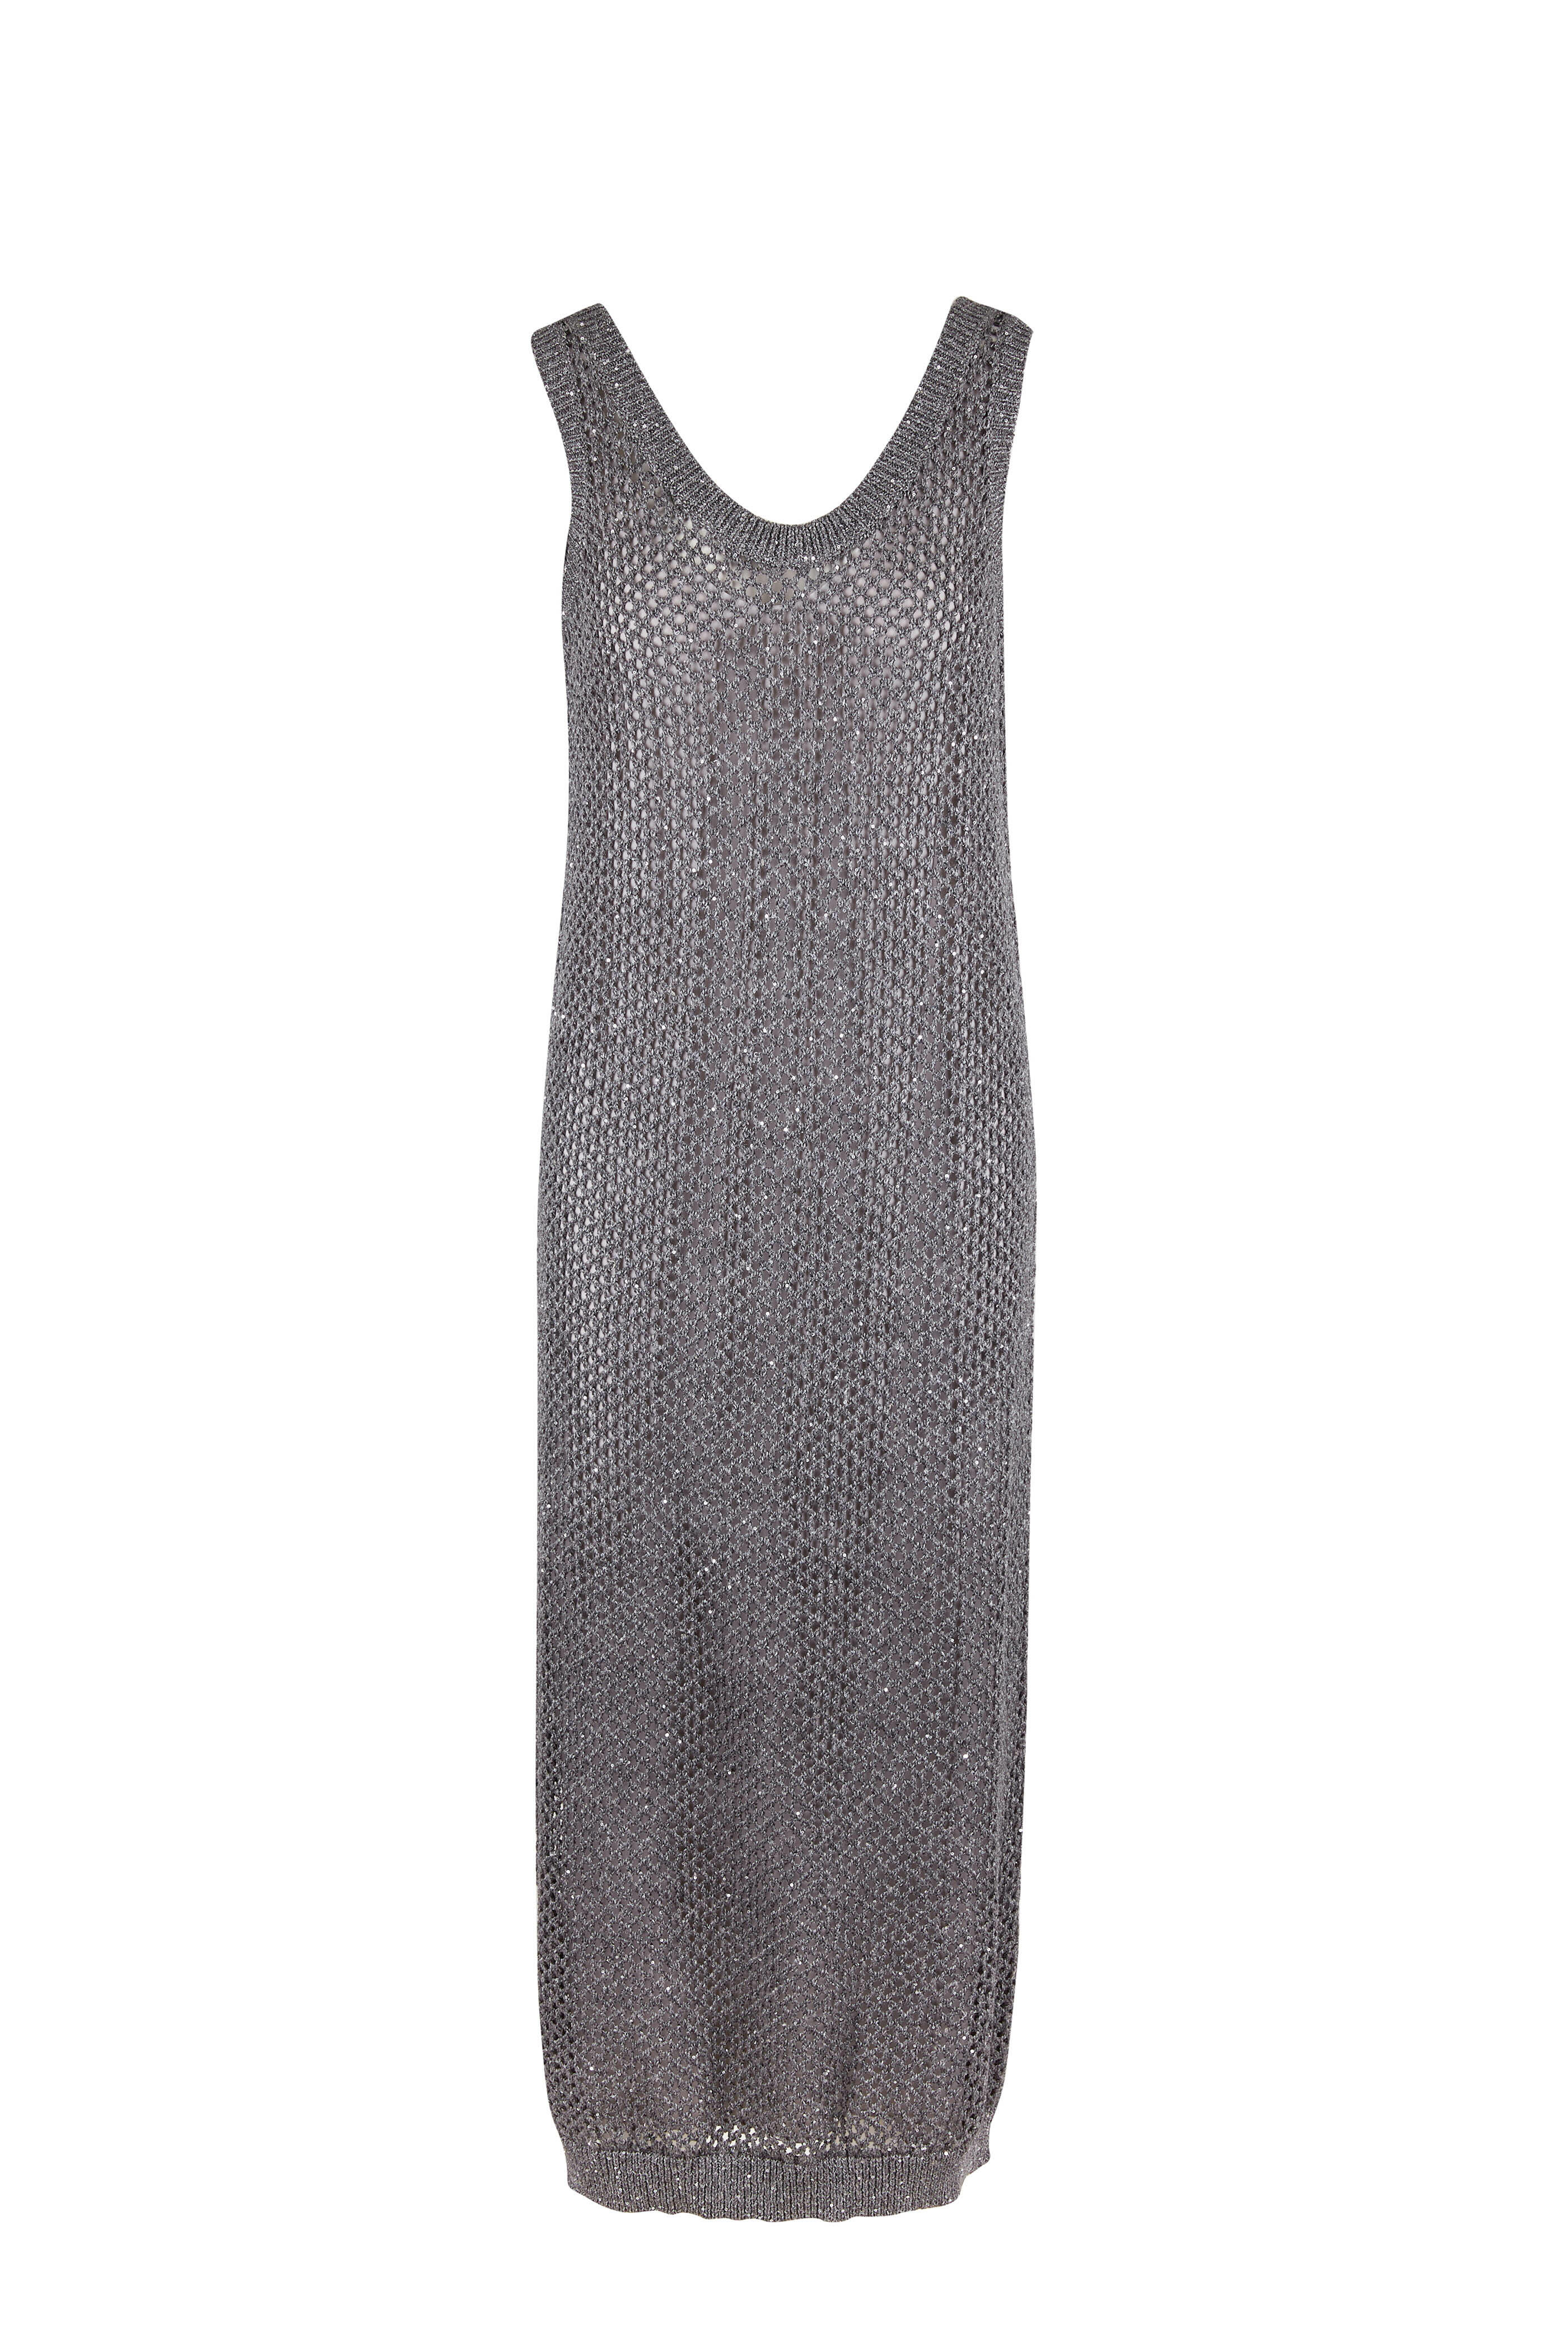 Brunello Cucinelli - Charcoal Gray Mini Paillette Sleeveless Knit Dress